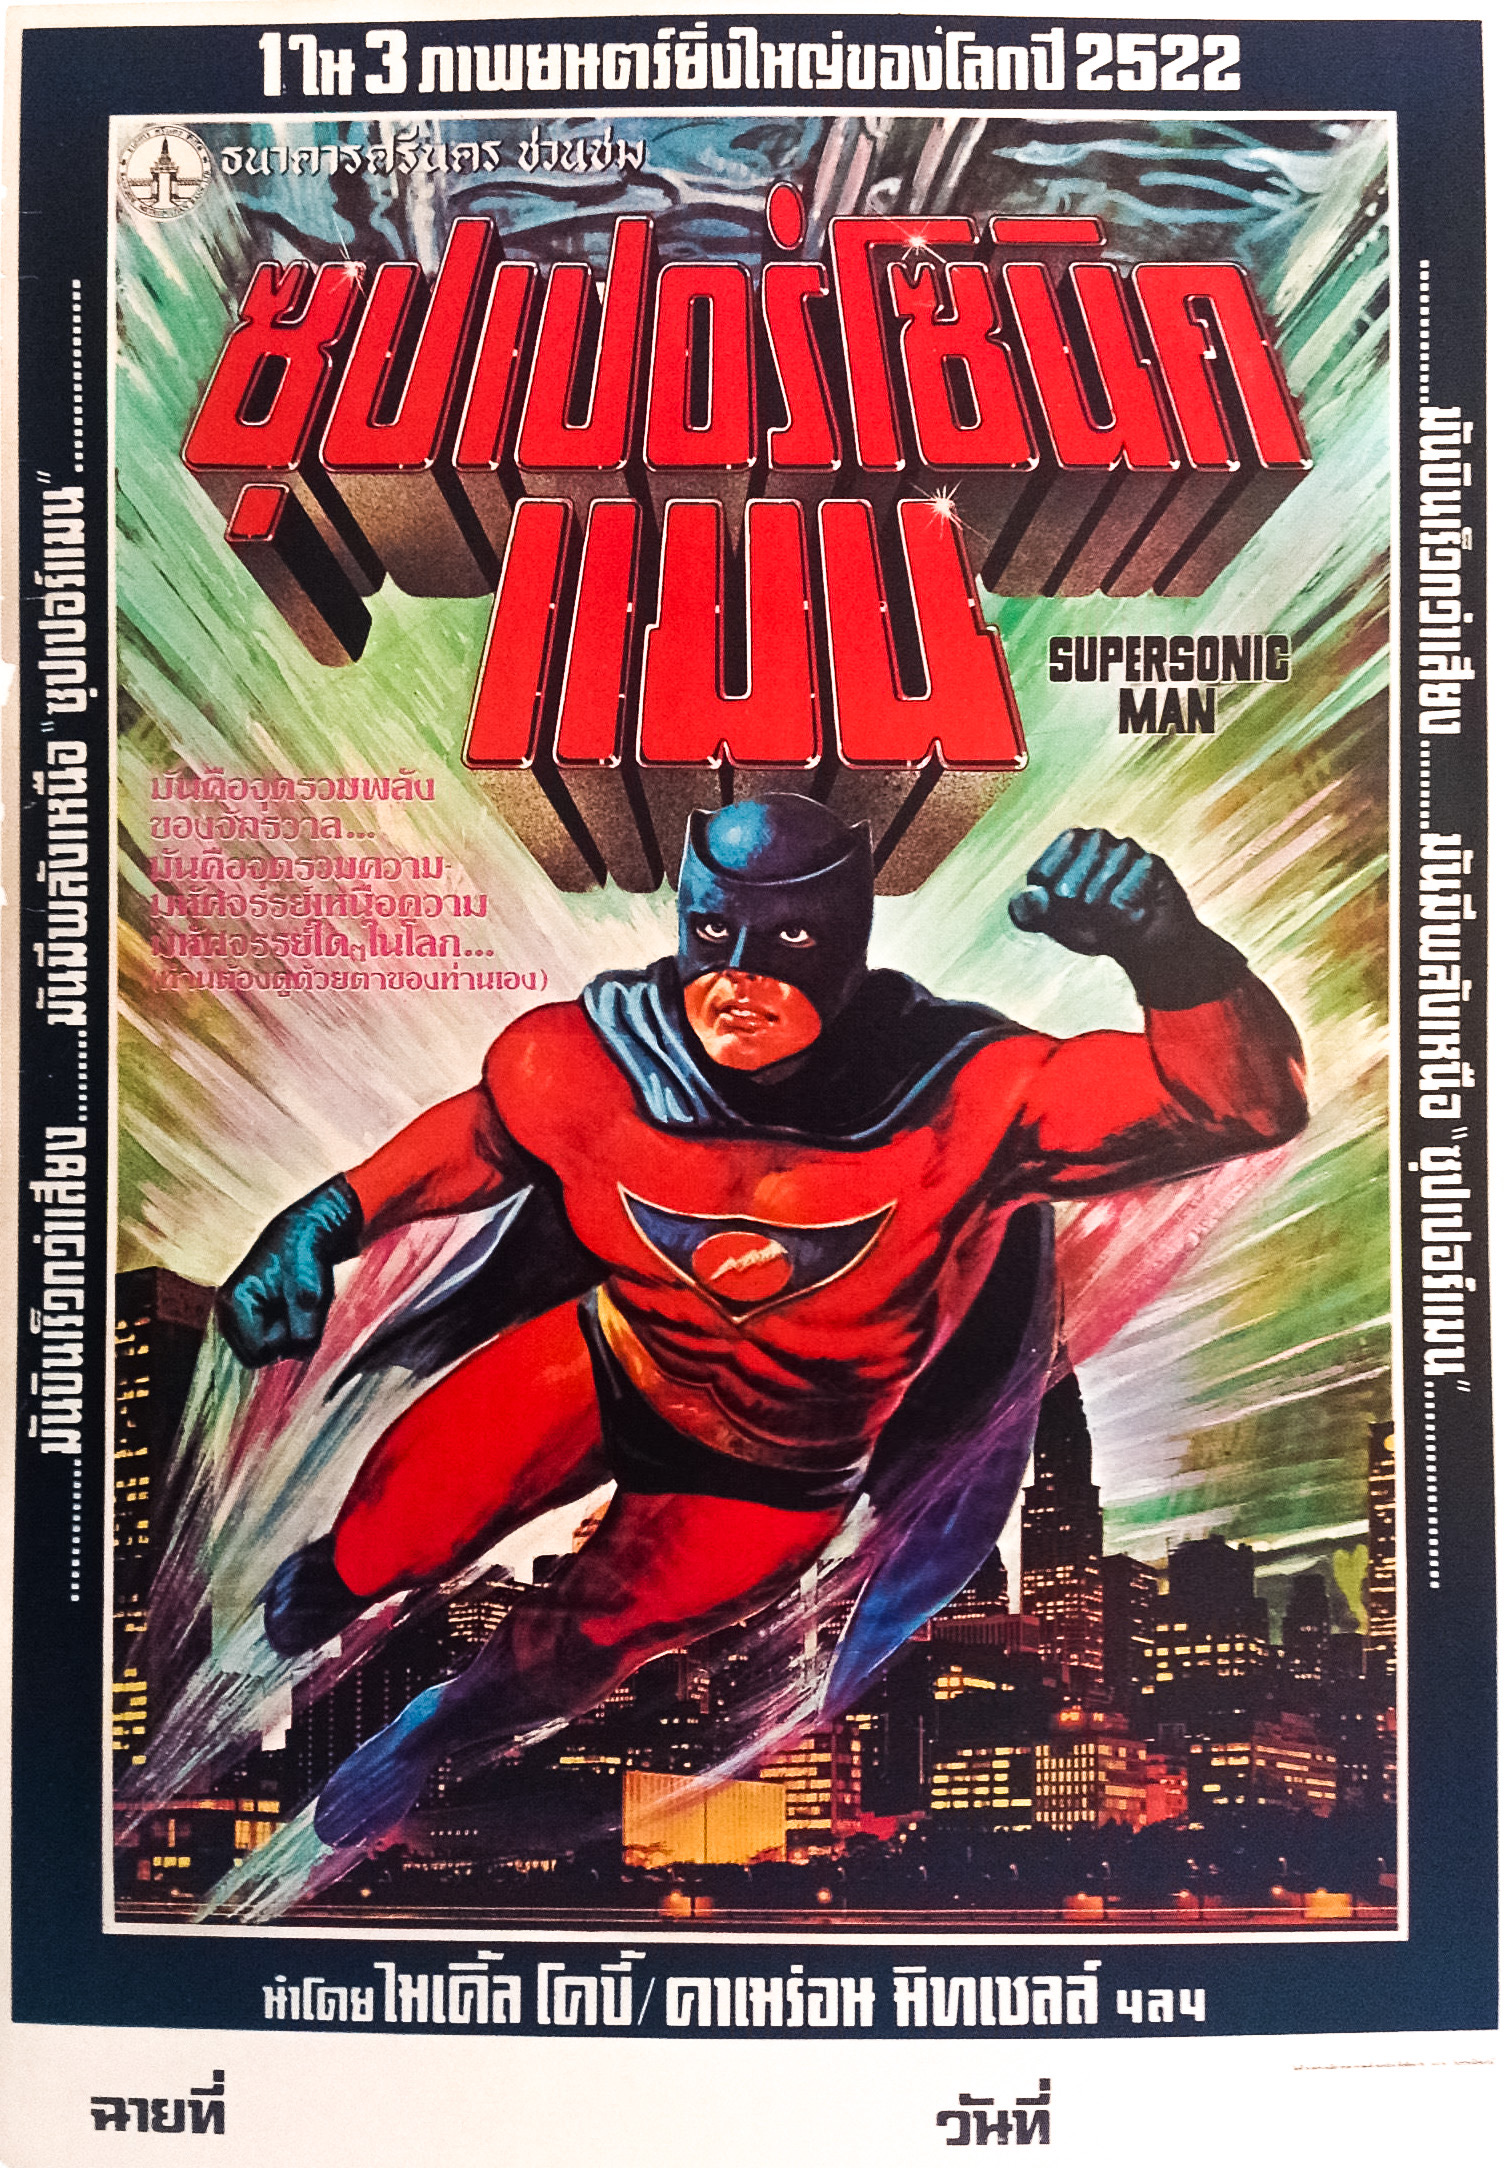 Supersonic Man (1979) Screenshot 4 